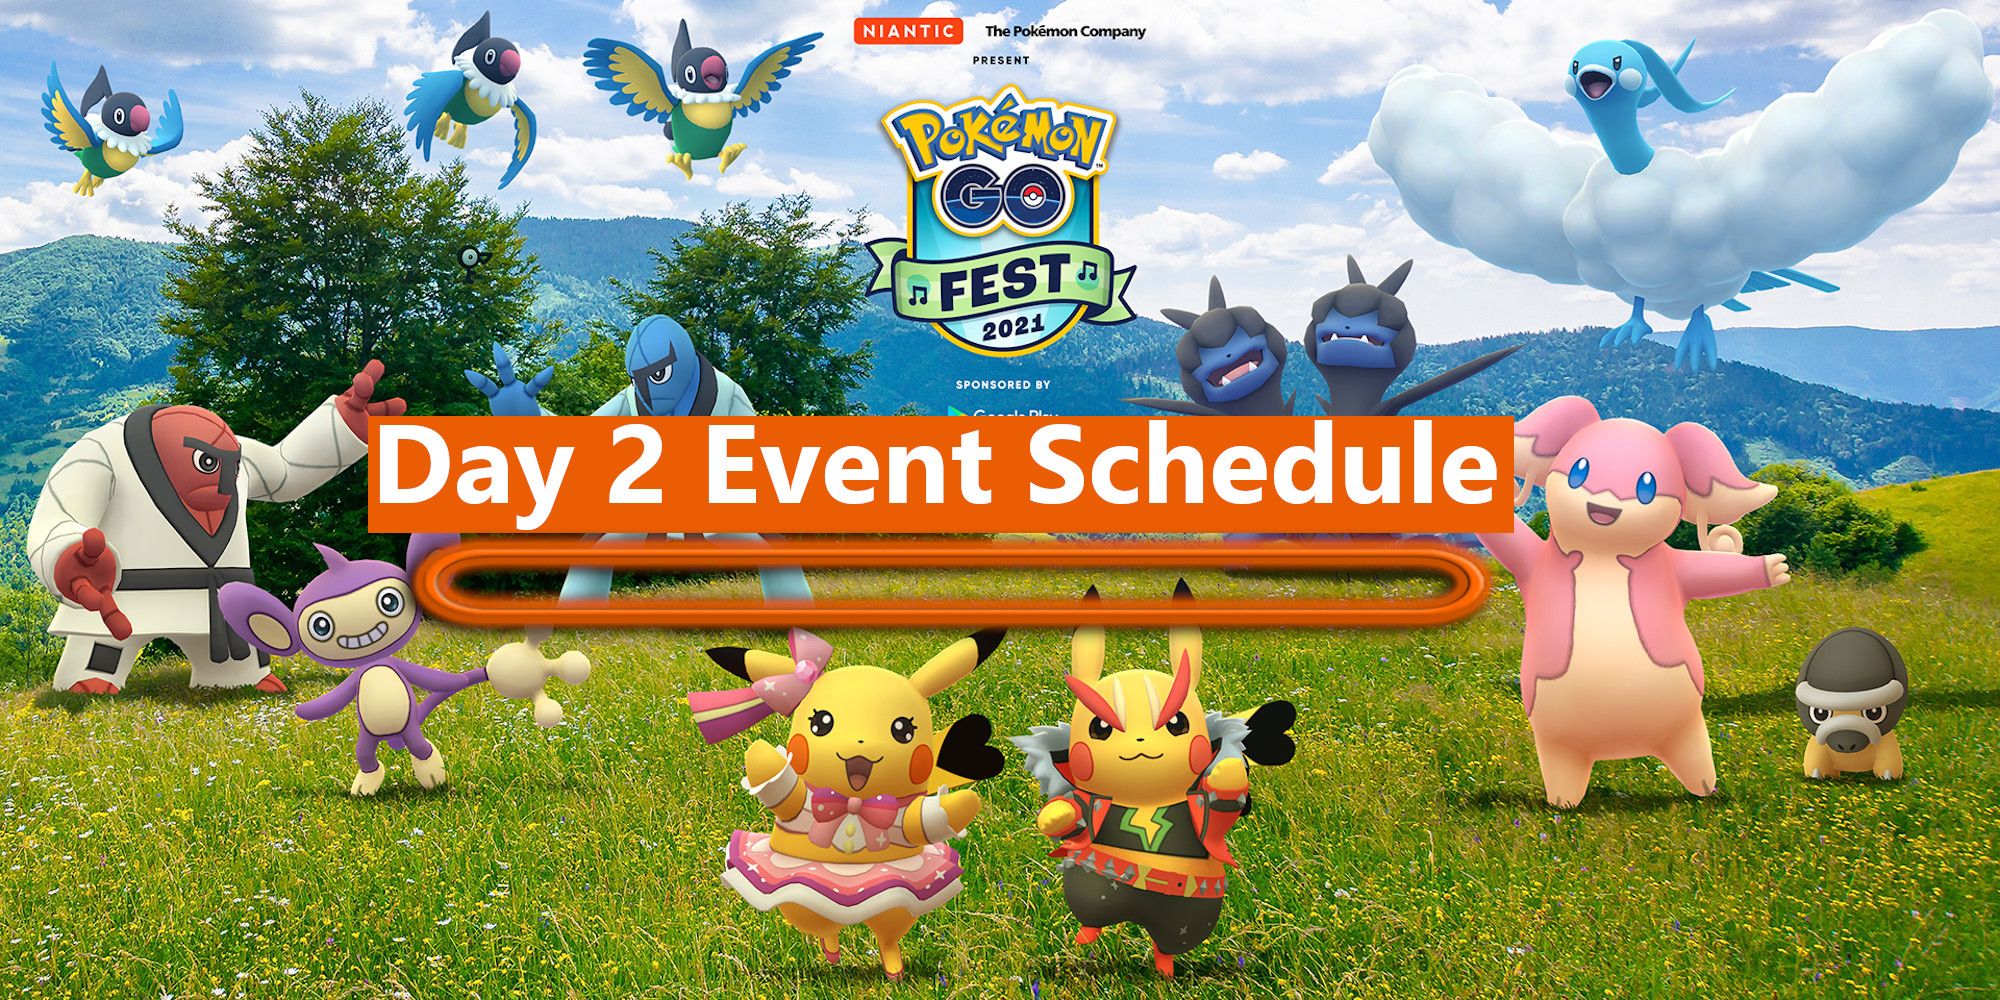 Pokemon-GO-Fest-2021-Day-2-event-schedule-sunday-pokemongolive